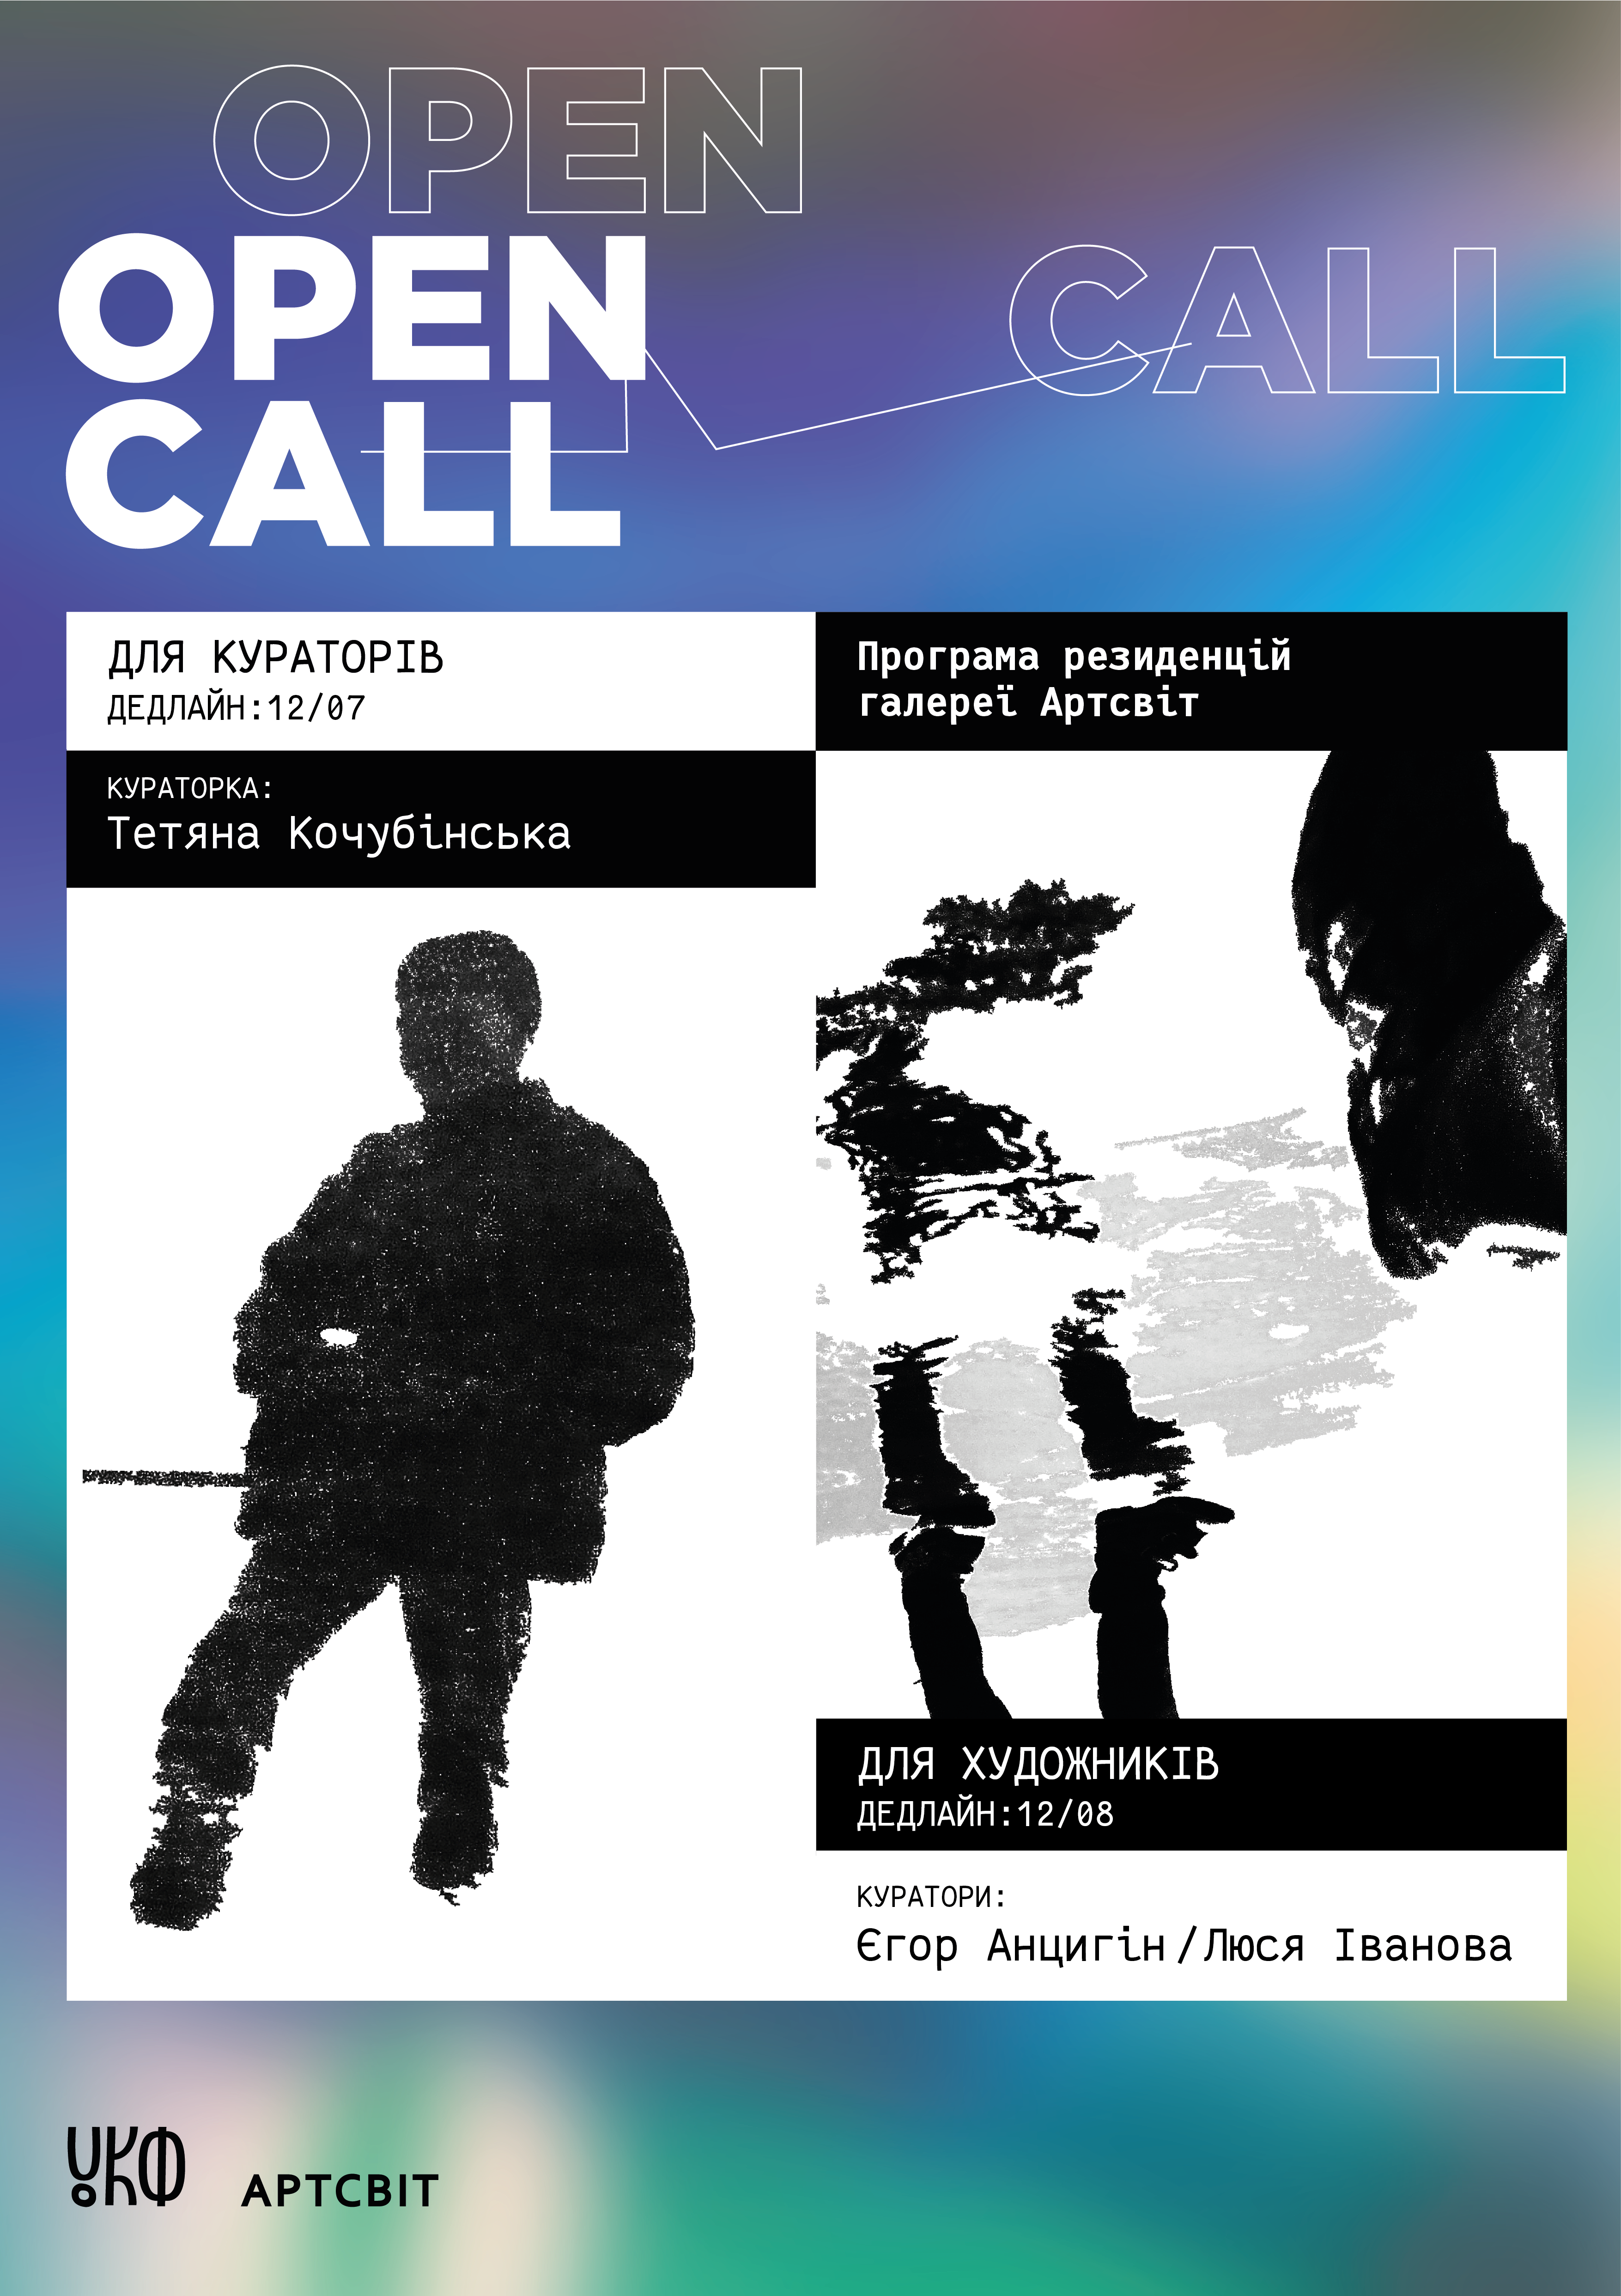 Open Call Crossing Днепр, 04.07.2020, цена, купить билеты. Афиша Днепра